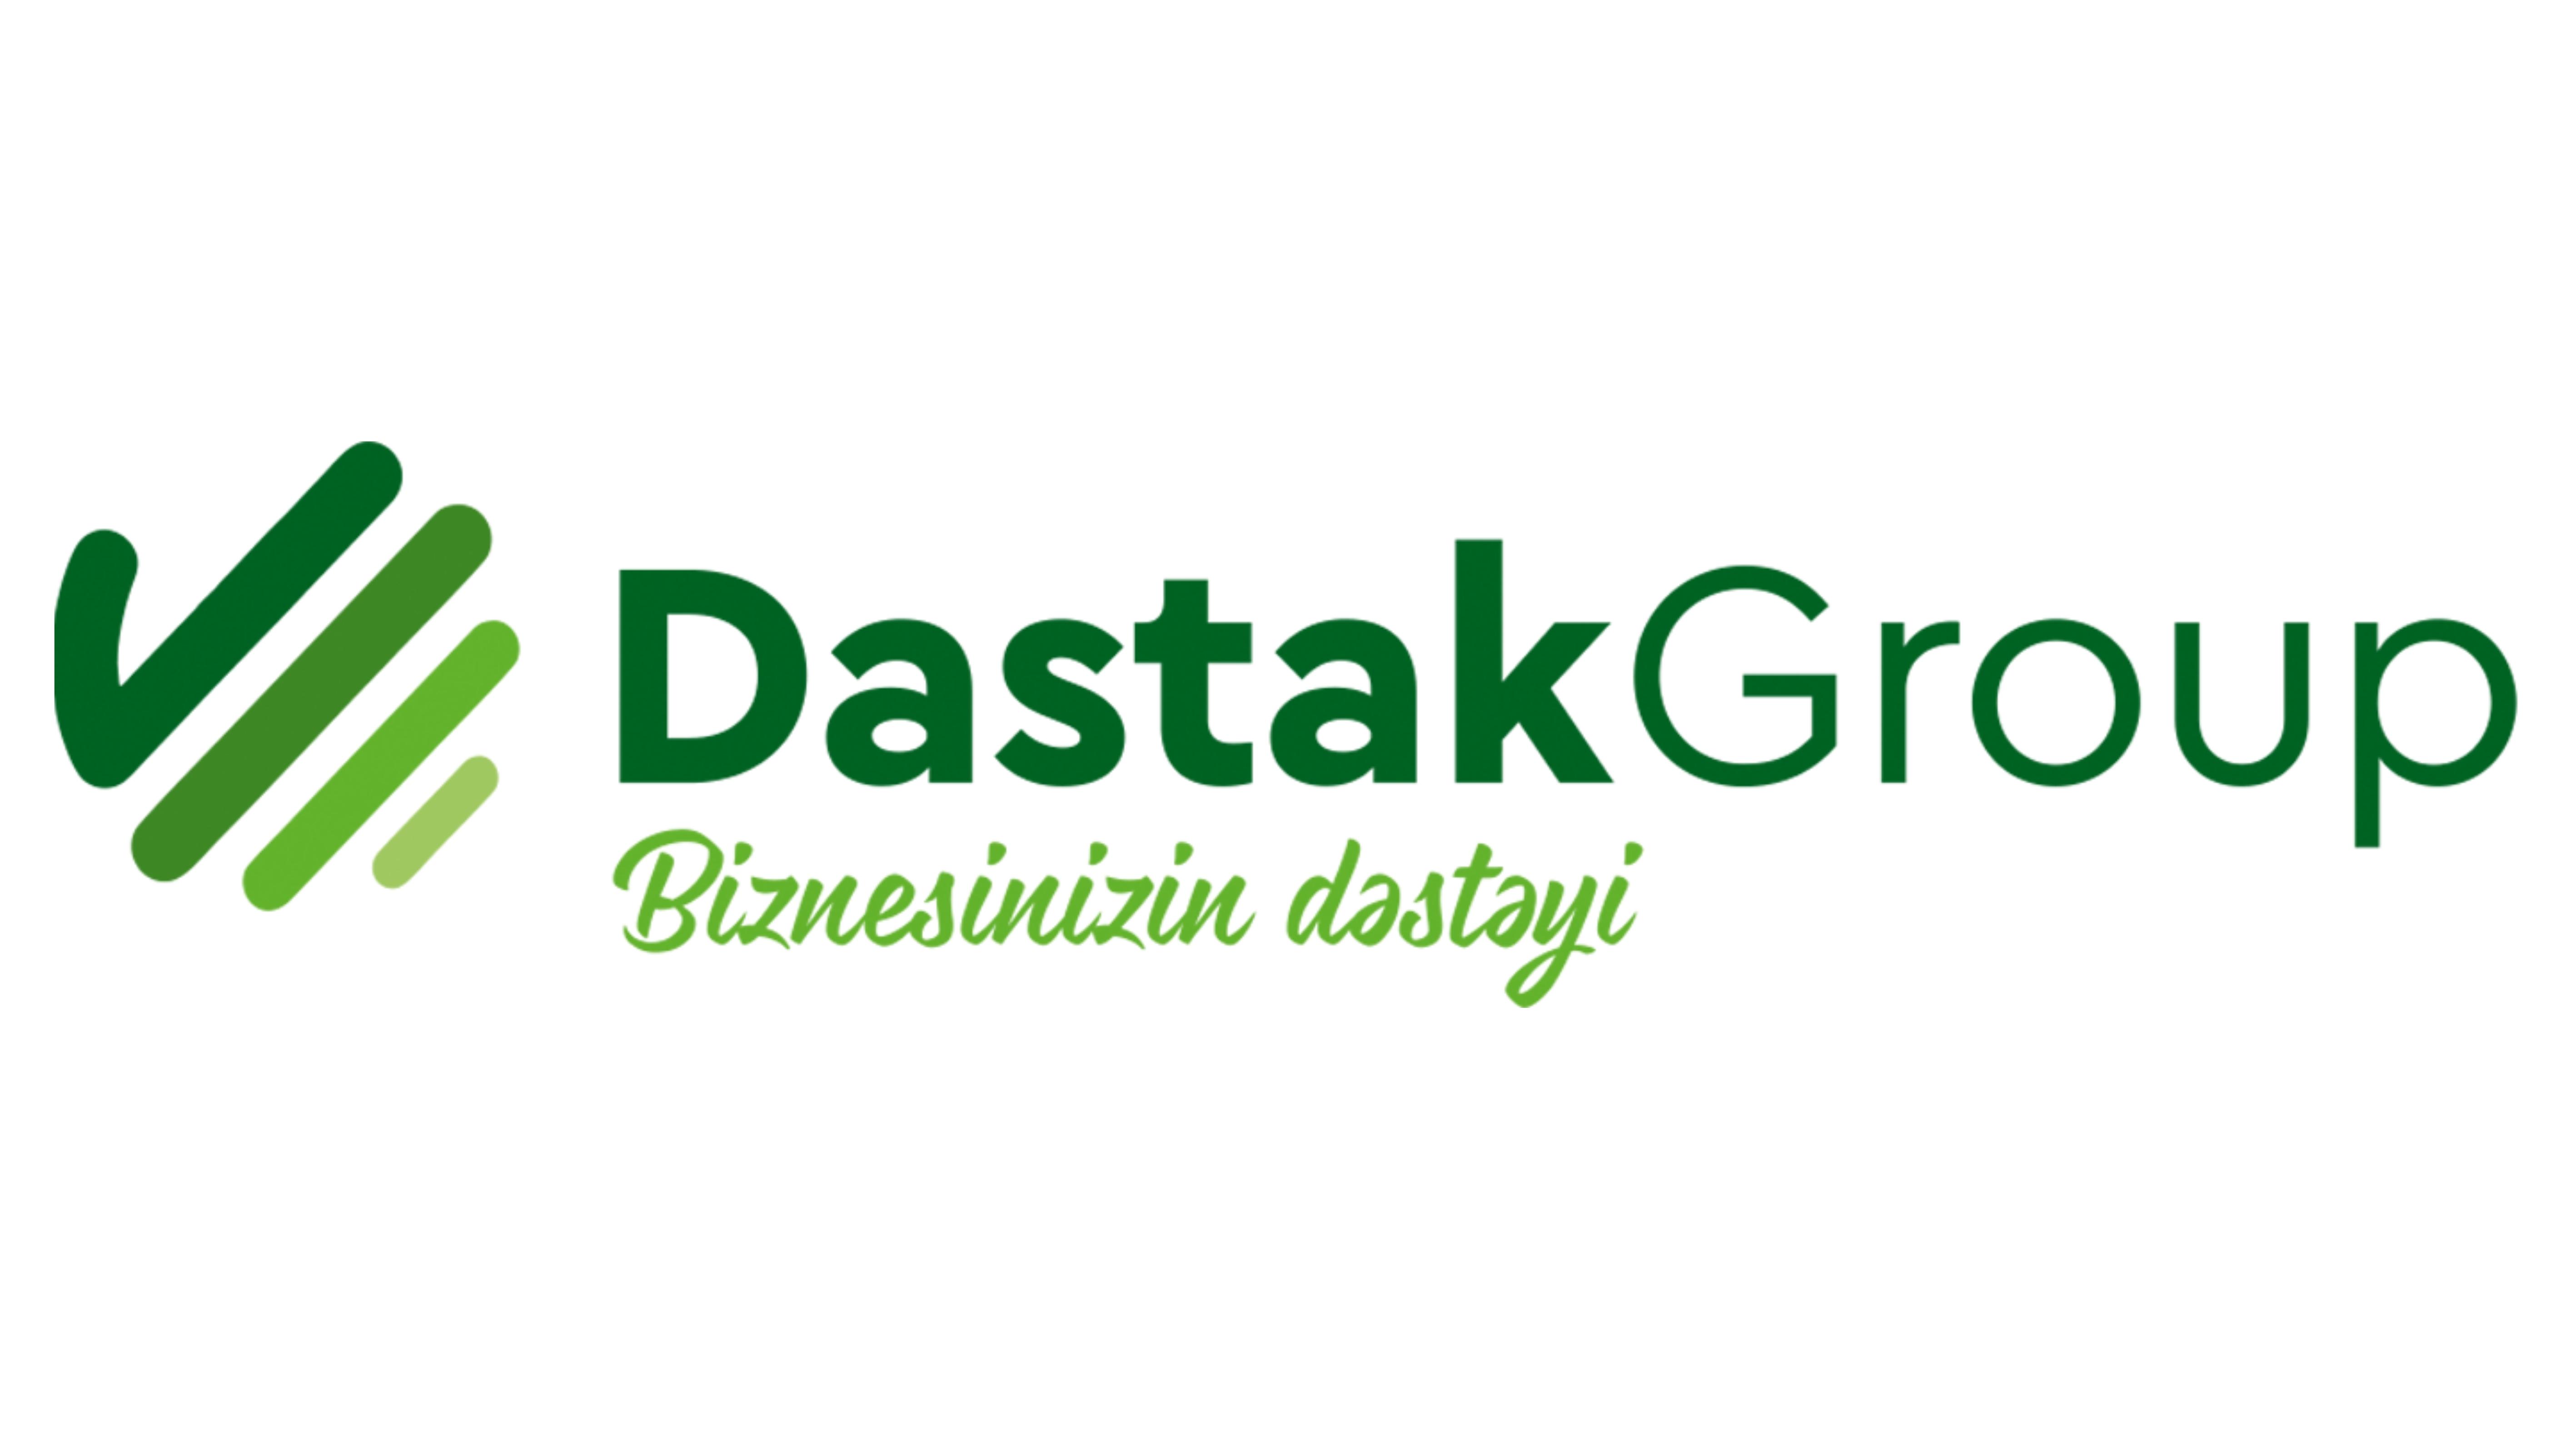 Dastak Group